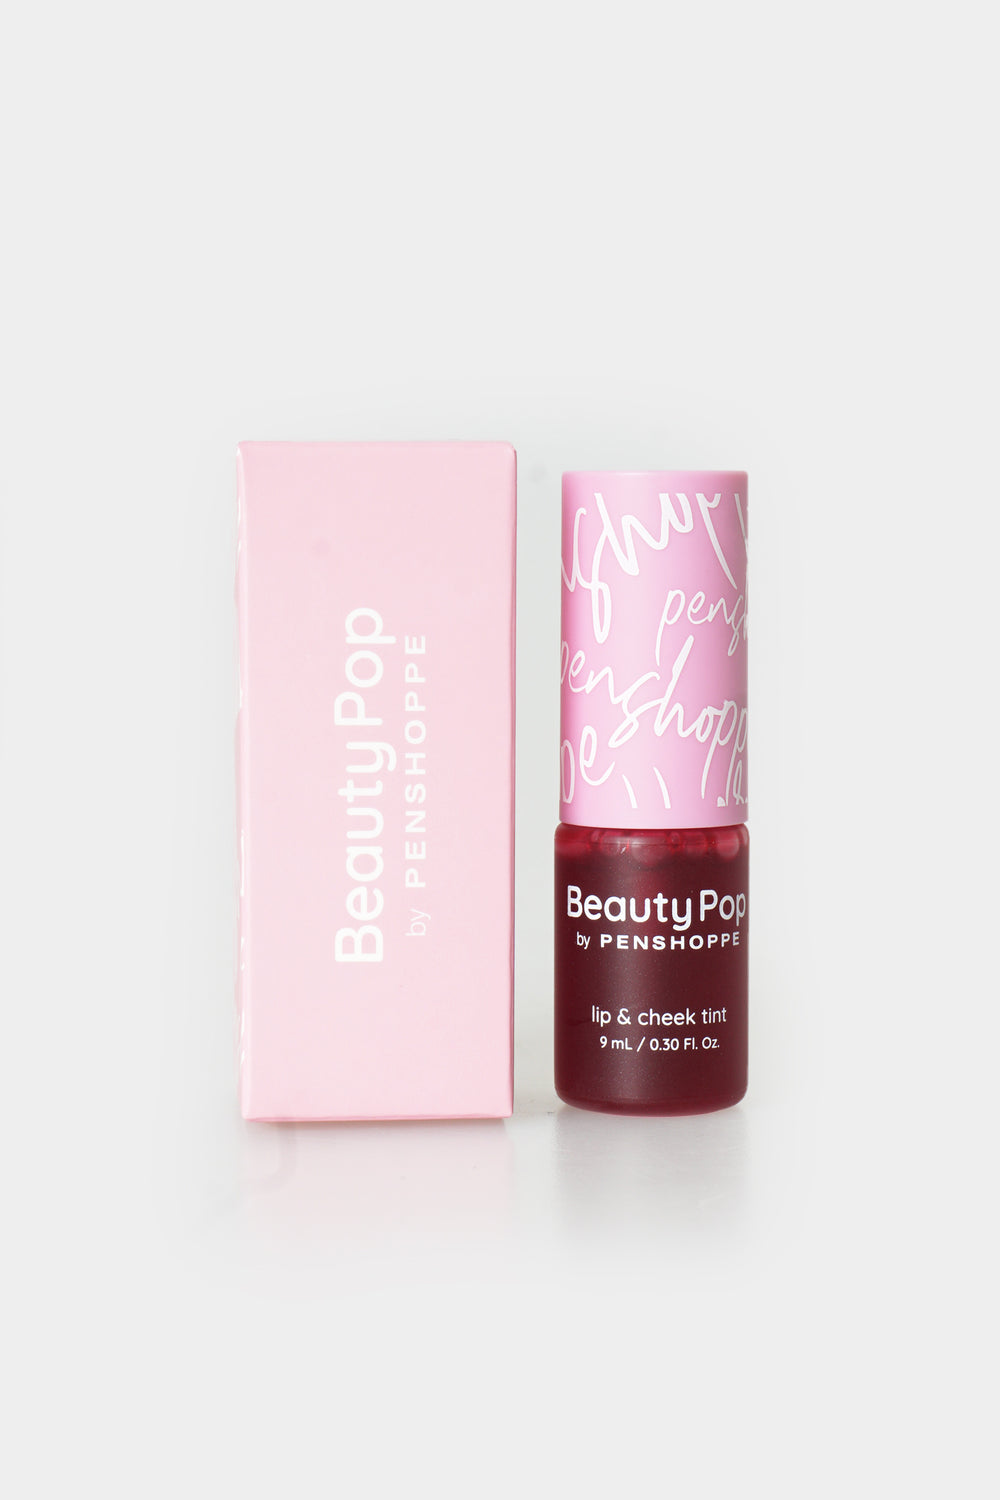 Penshoppe Beauty Pop Lip & Cheek Tint In Flushed